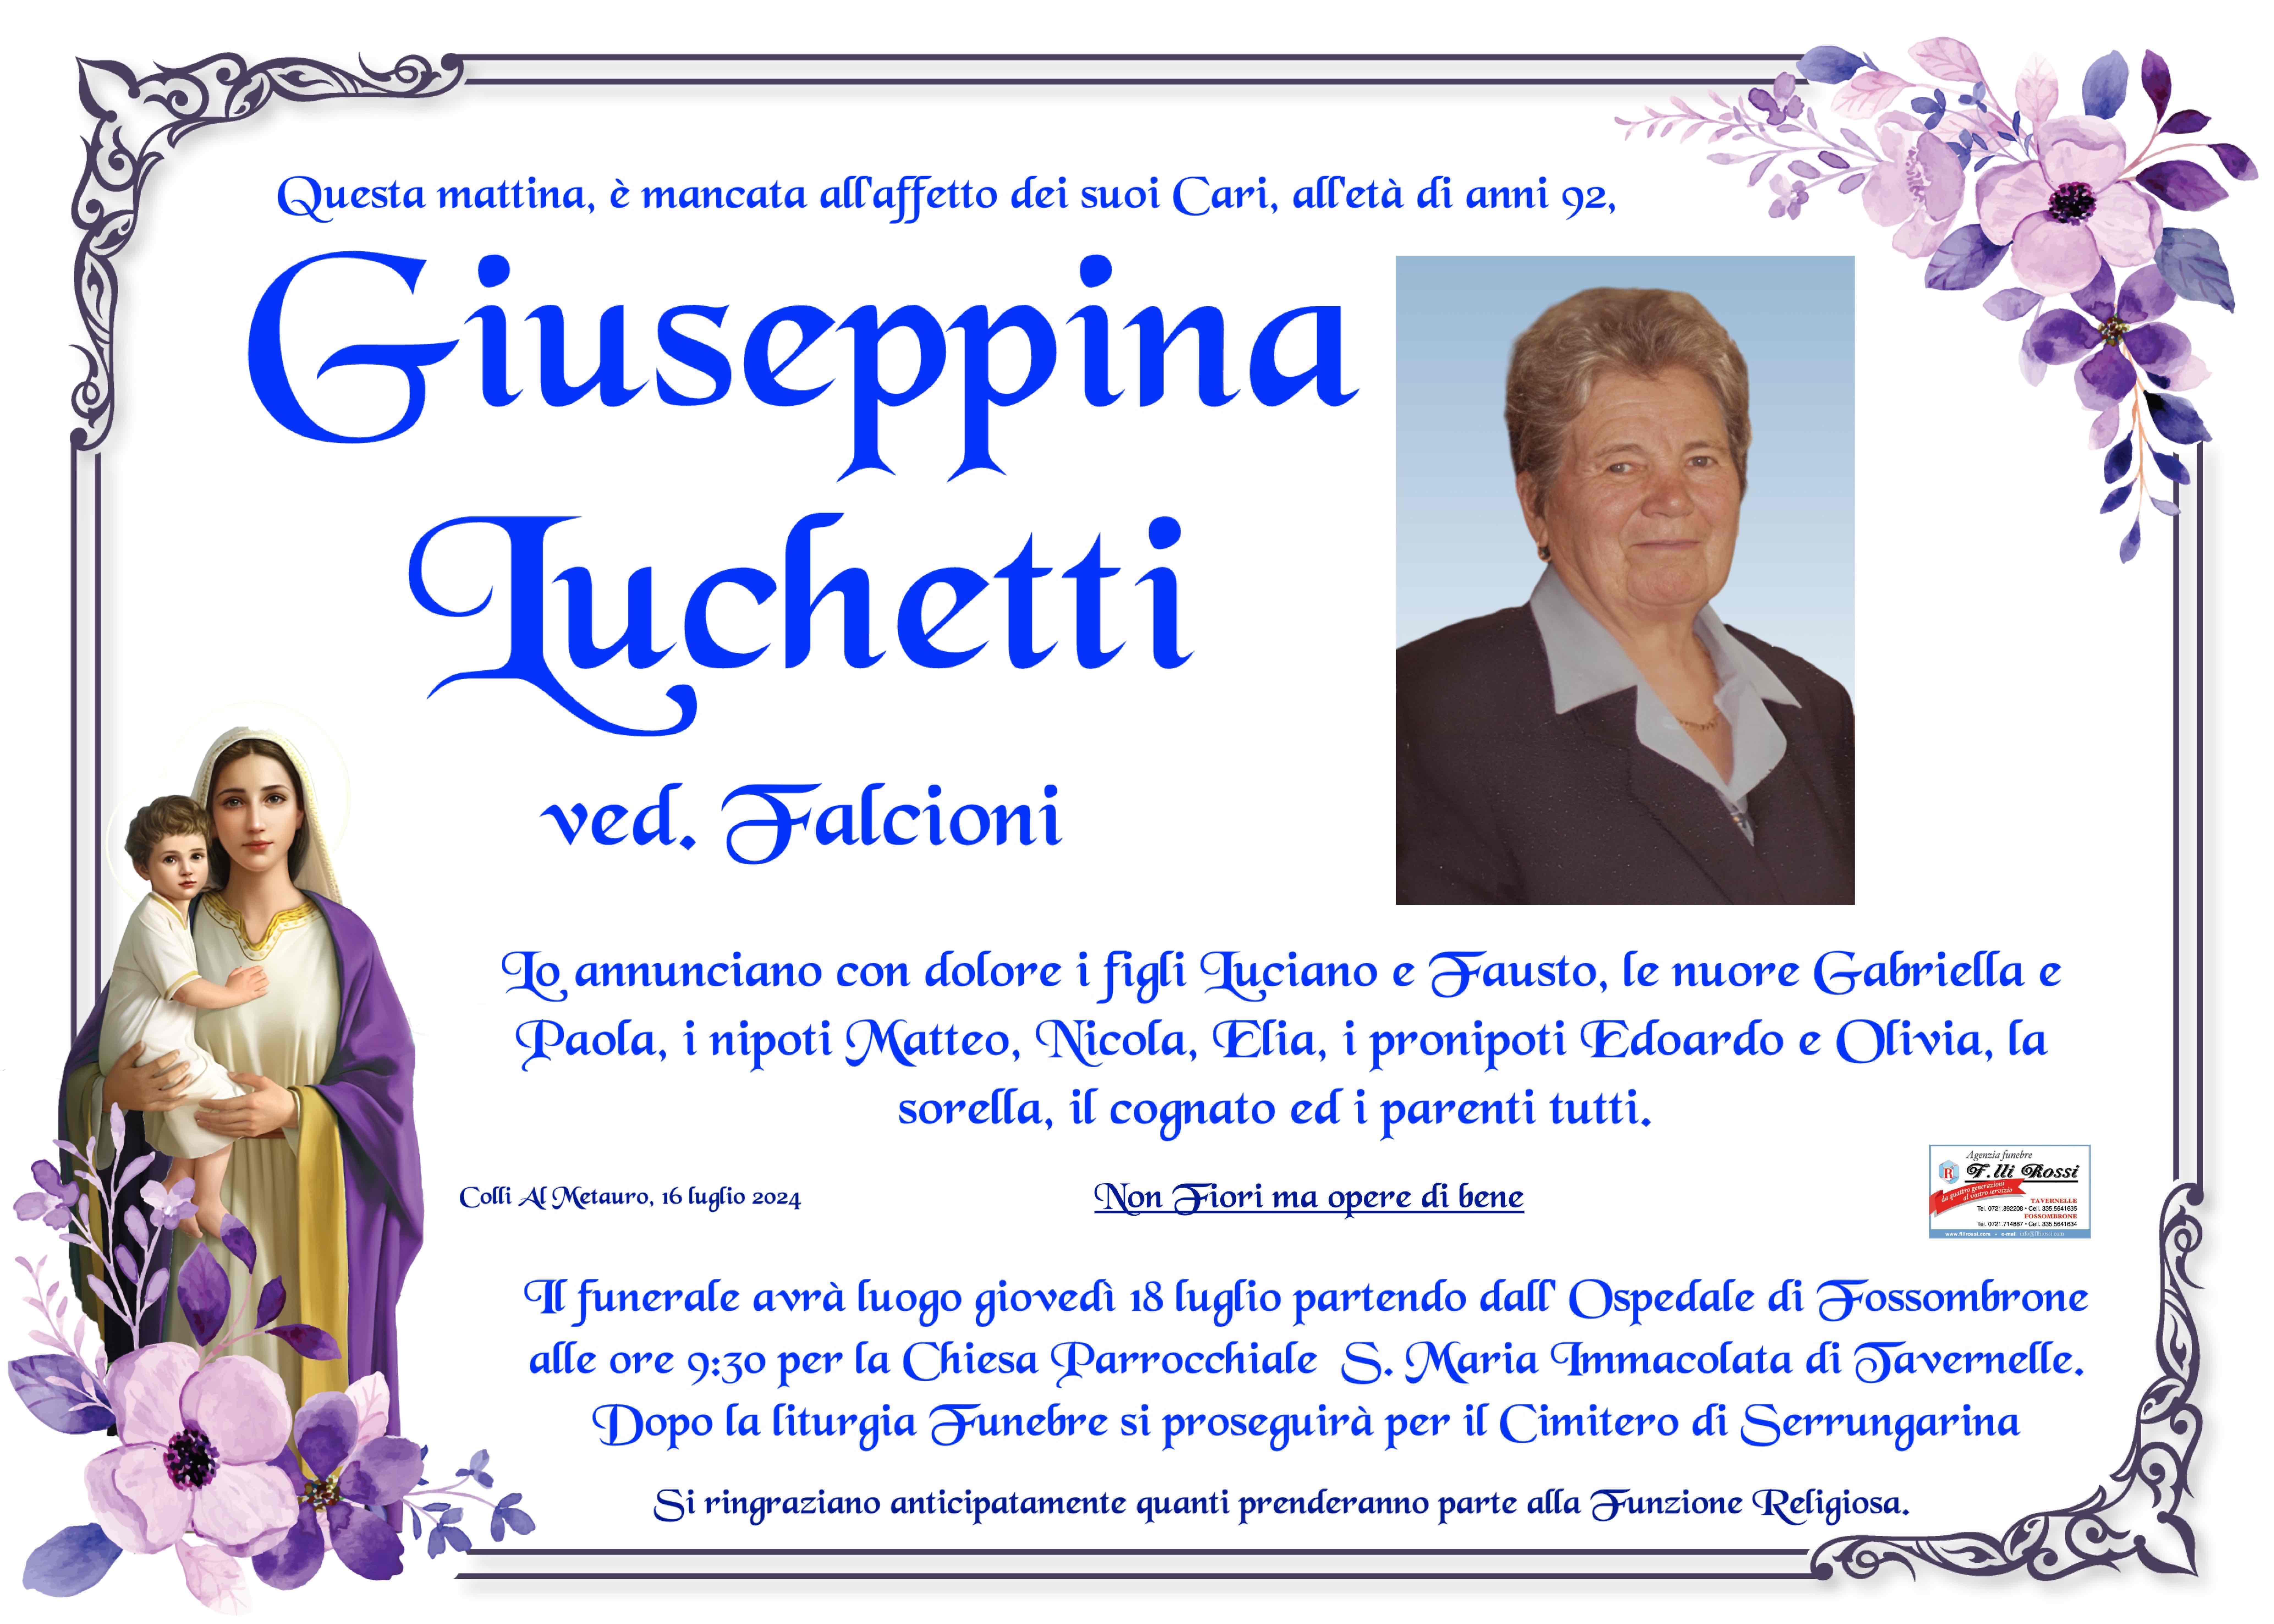 Giuseppina Luchetti